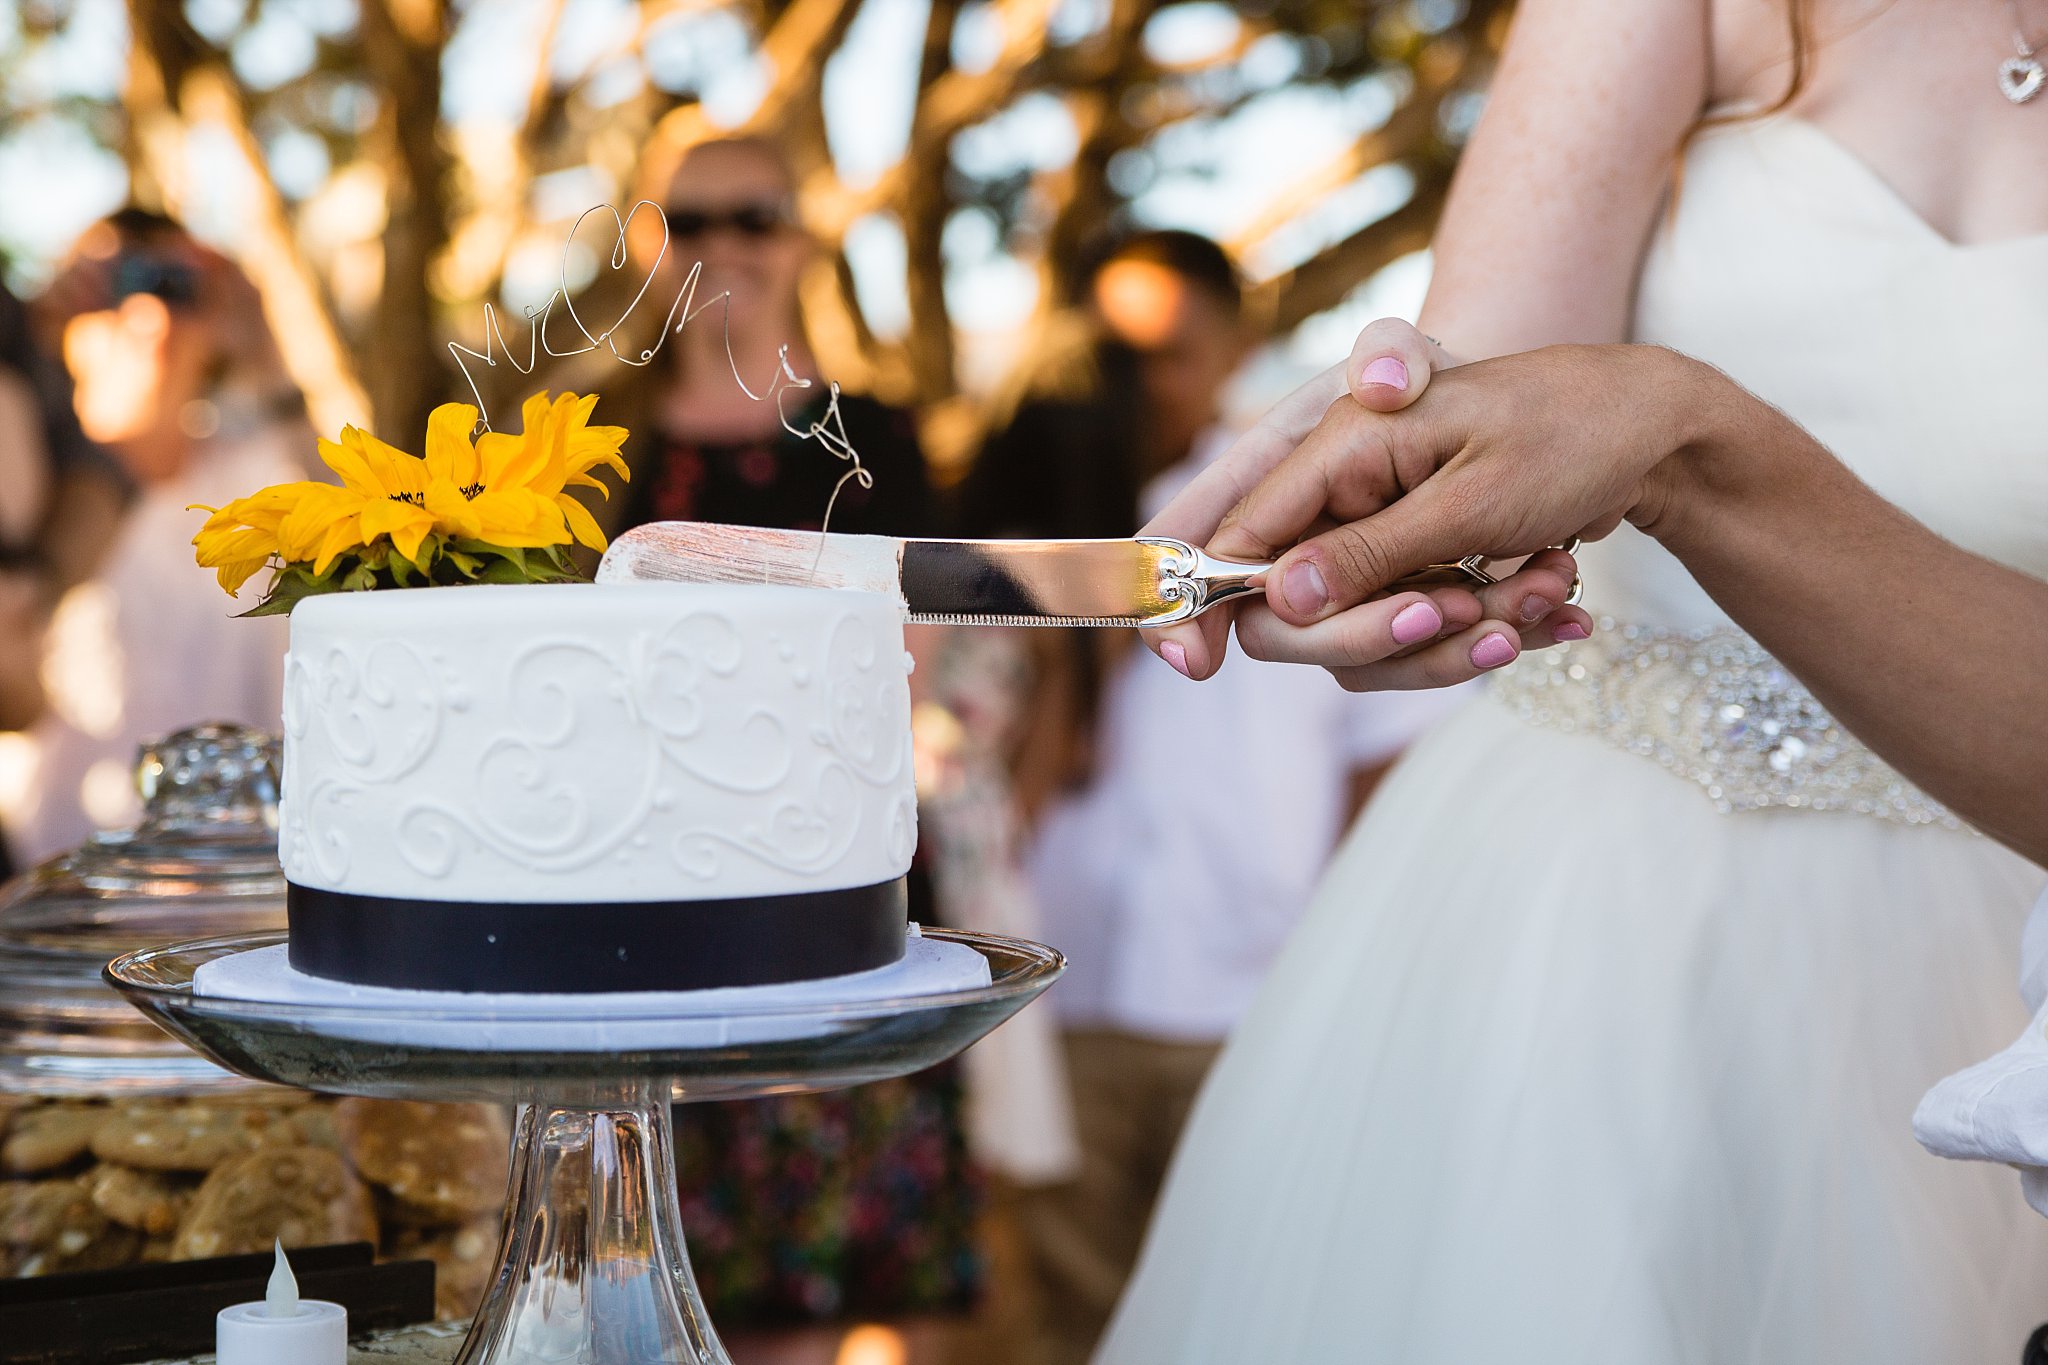 Bride and groom cutting their wedding cake at their Sky Ranch Lodge wedding reception by Arizona wedding photographer PMA Photography.